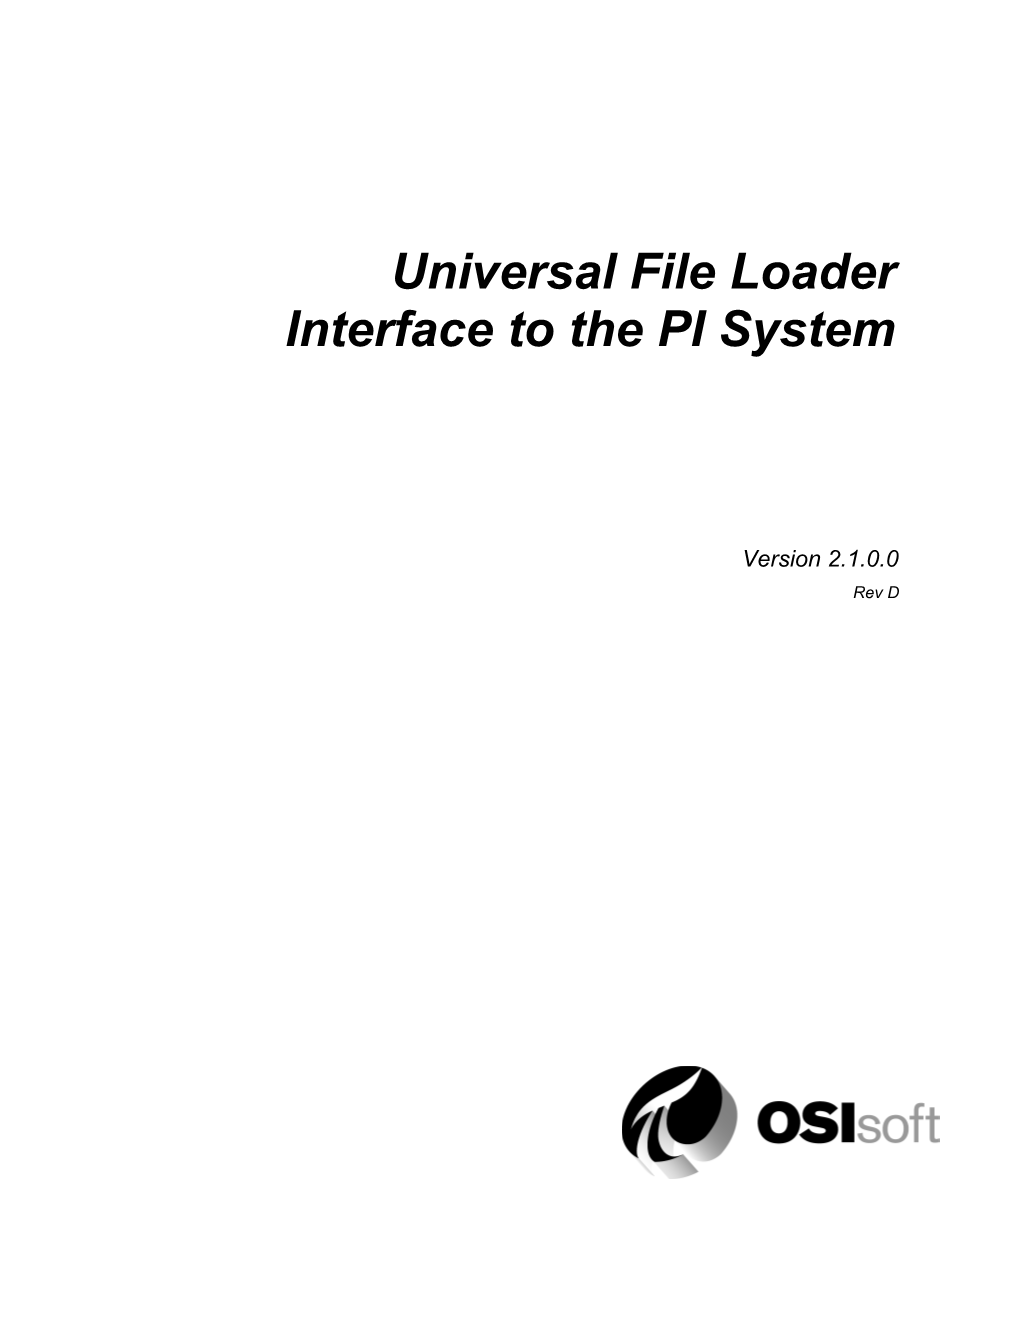 PI UFL Interface